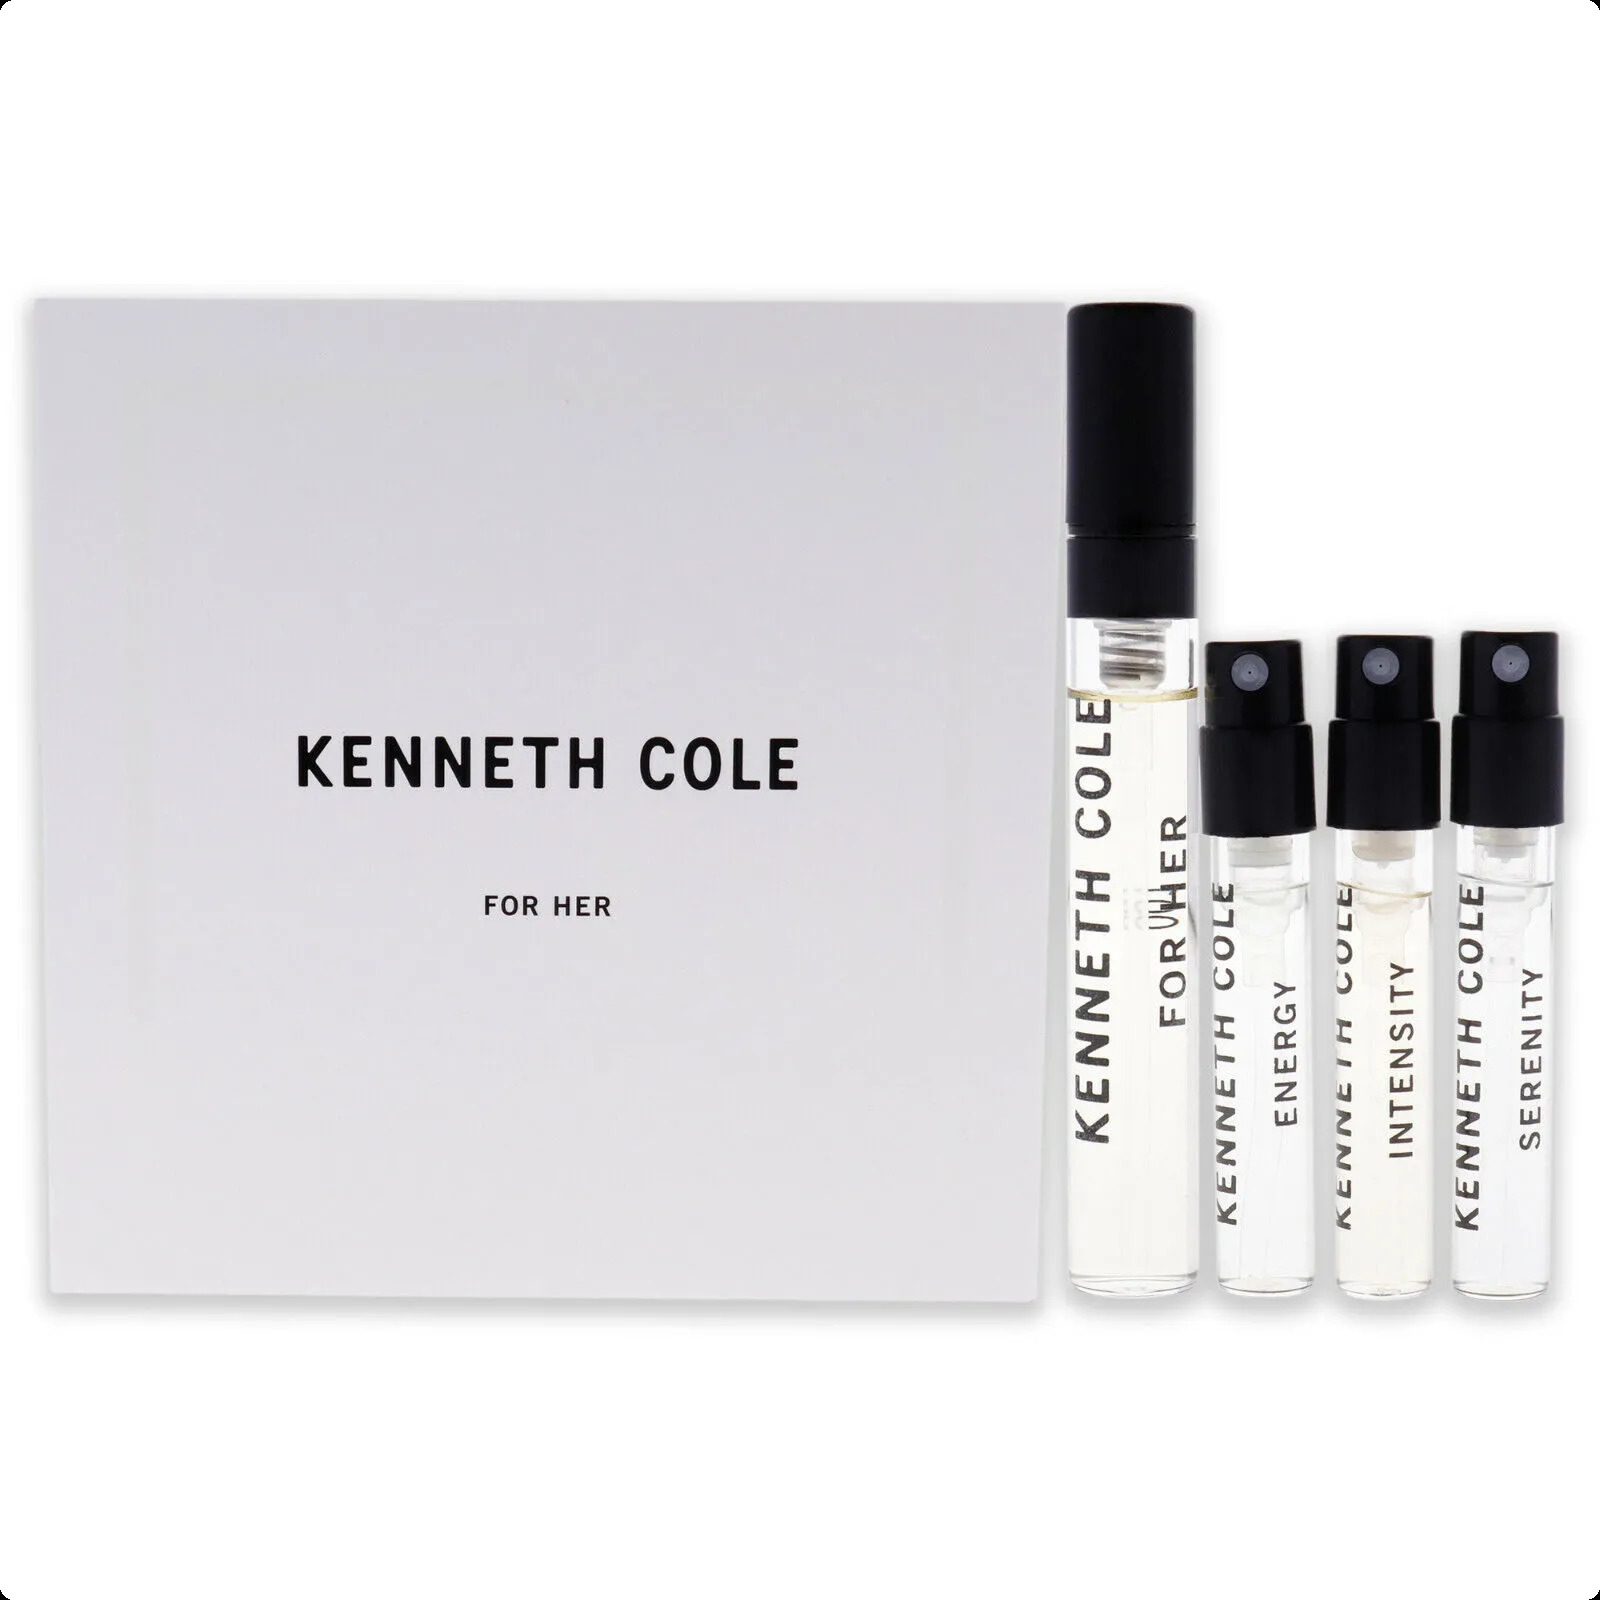 Kenneth Cole Kenneth Cole for Her Набор (парфюмерная вода 4 мл + парфюмерная вода 1.5 мл + парфюмерная вода 1.5 мл + парфюмерная вода 1.5 мл) для женщин